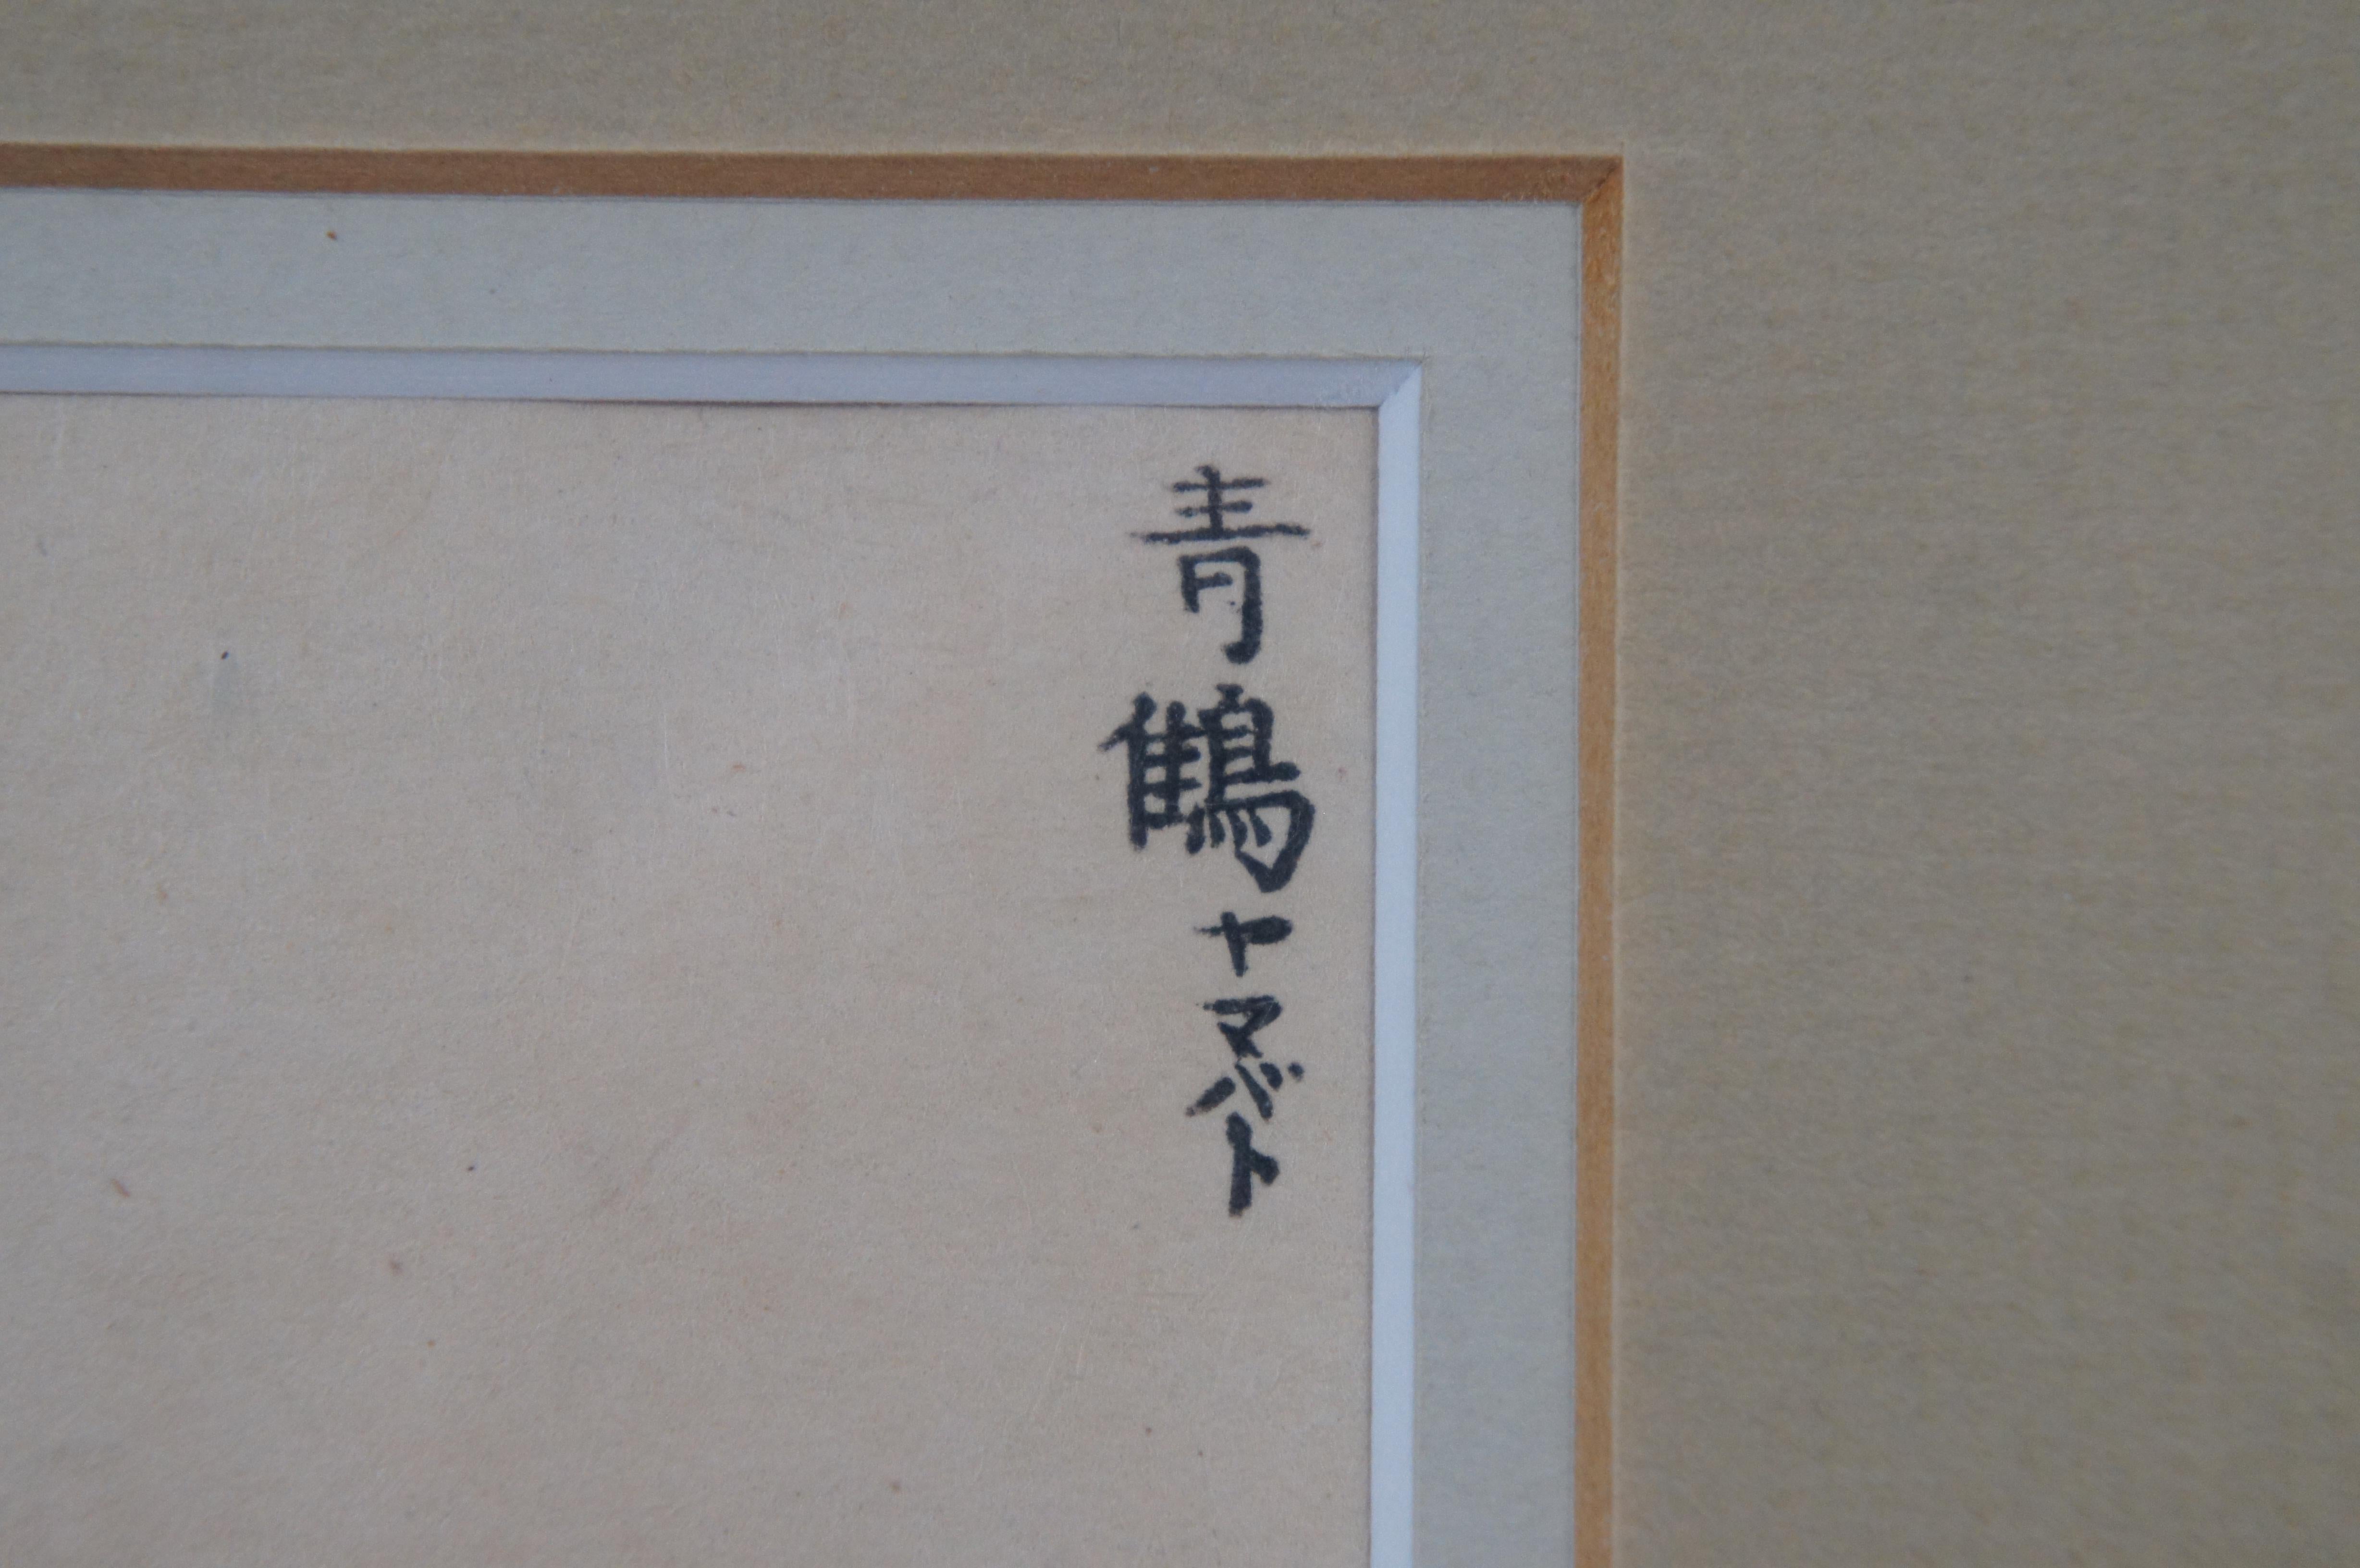 Antique 19th Century Japanese Kono Bairei Meiji Bird Flower Woodblock Print 14